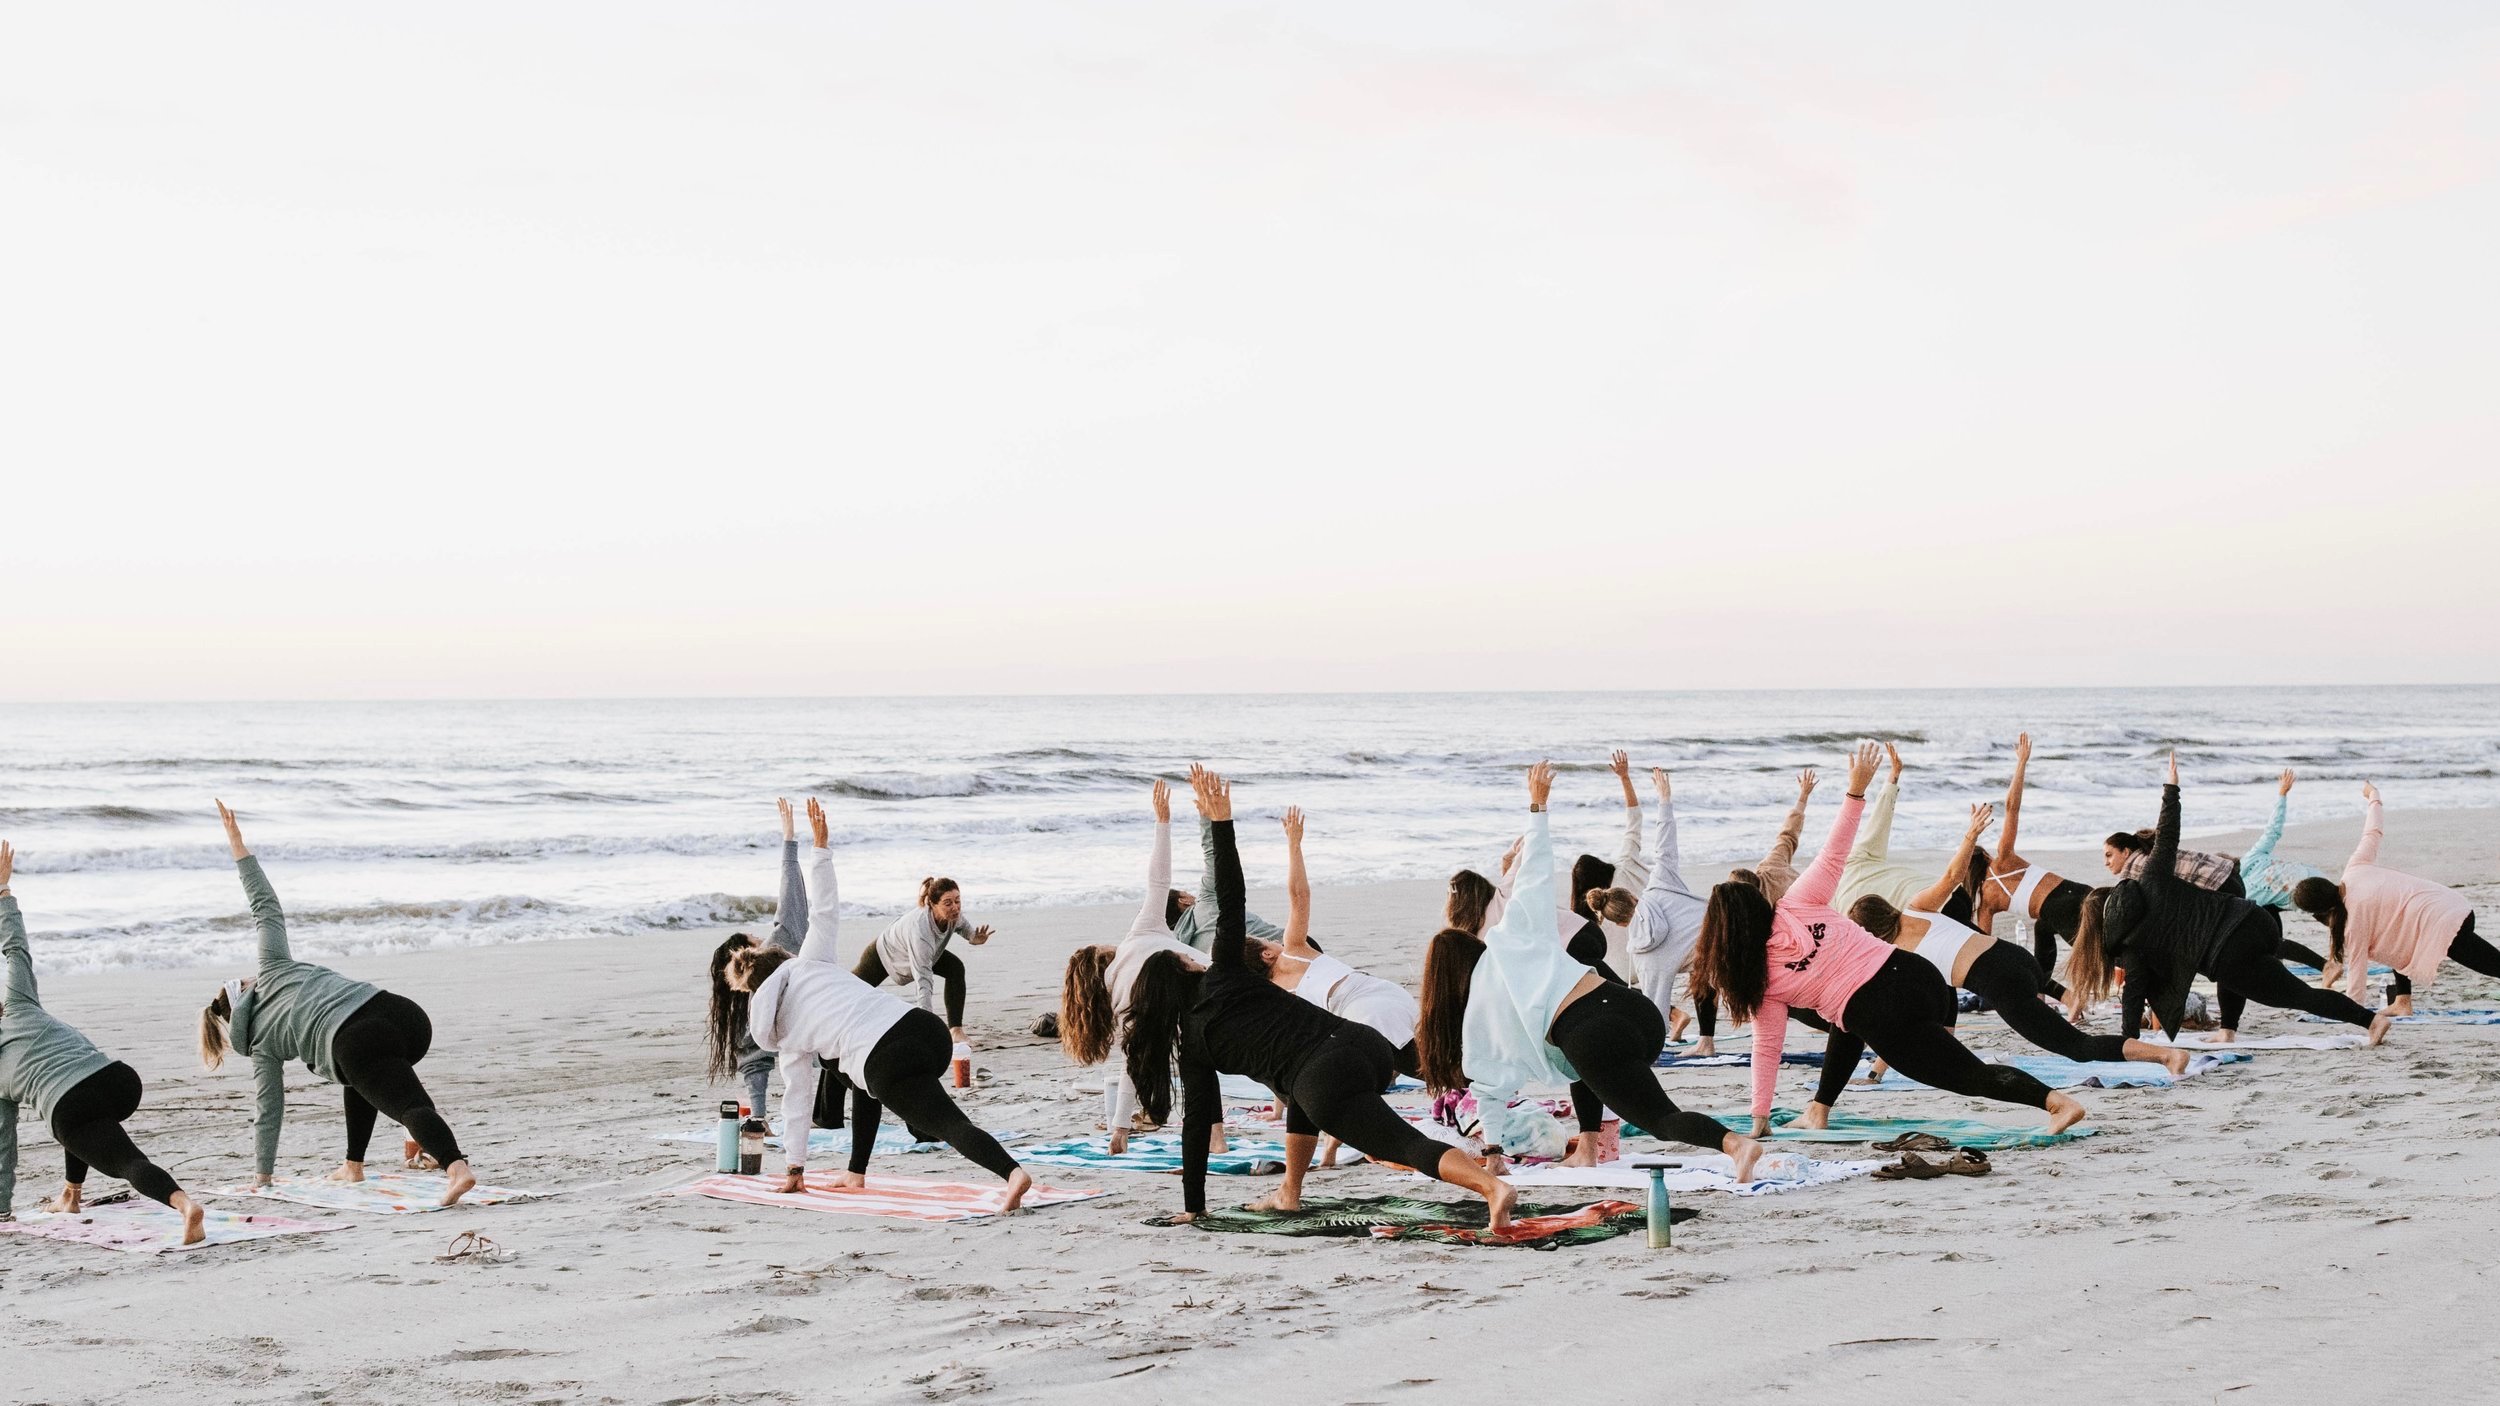 Beach Yoga-Recreation